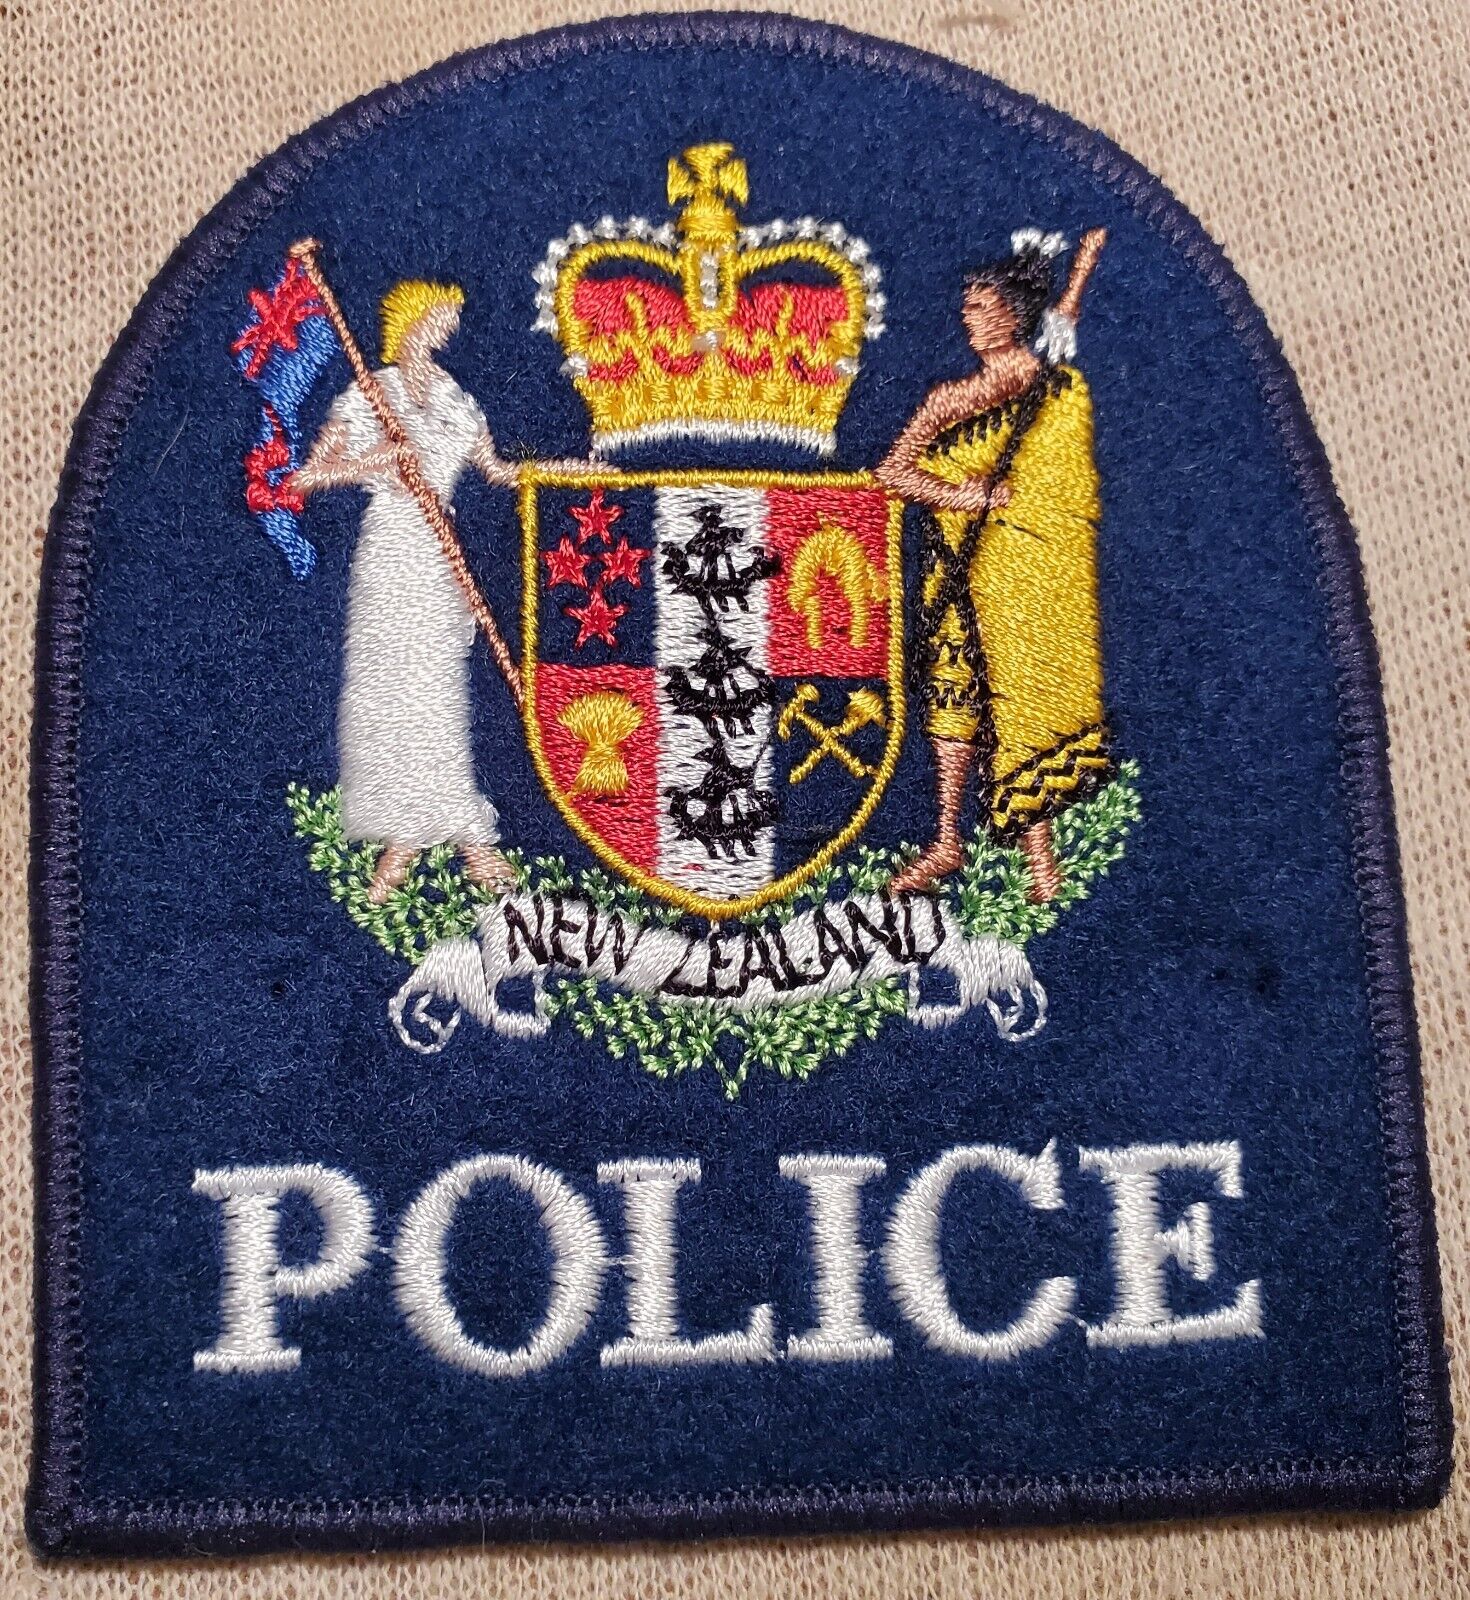 New Zealand Police Patch (Felt)